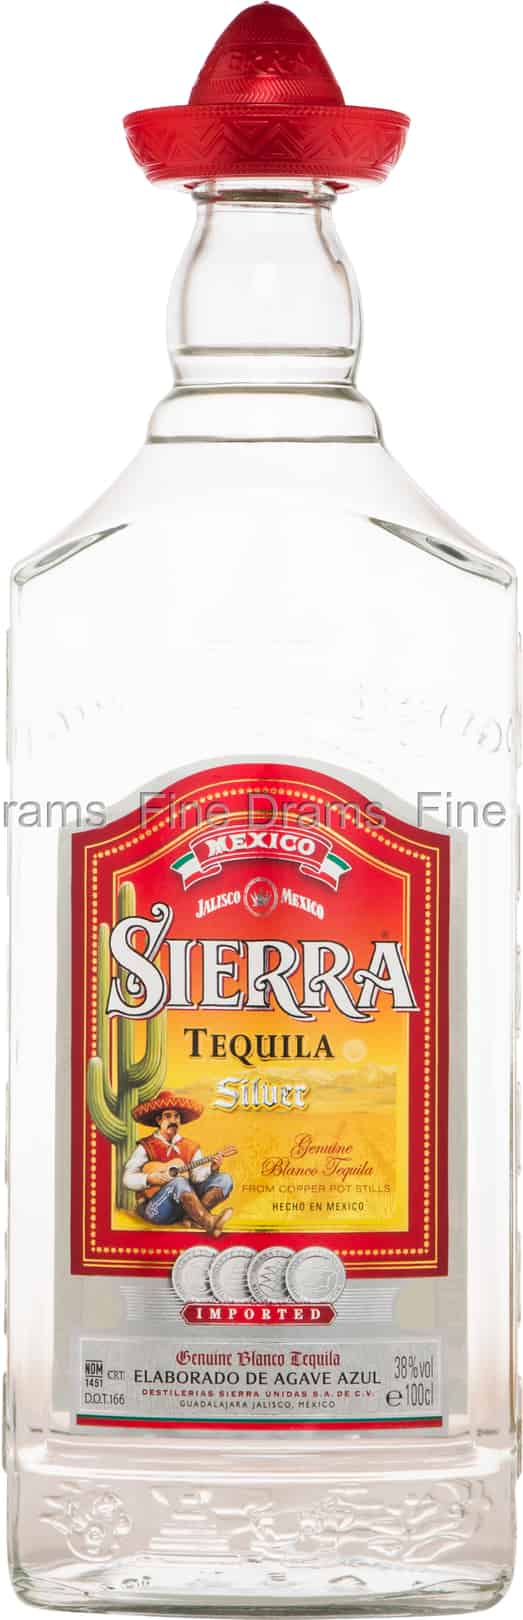 Silver Tequila (1 Liter) Sierra